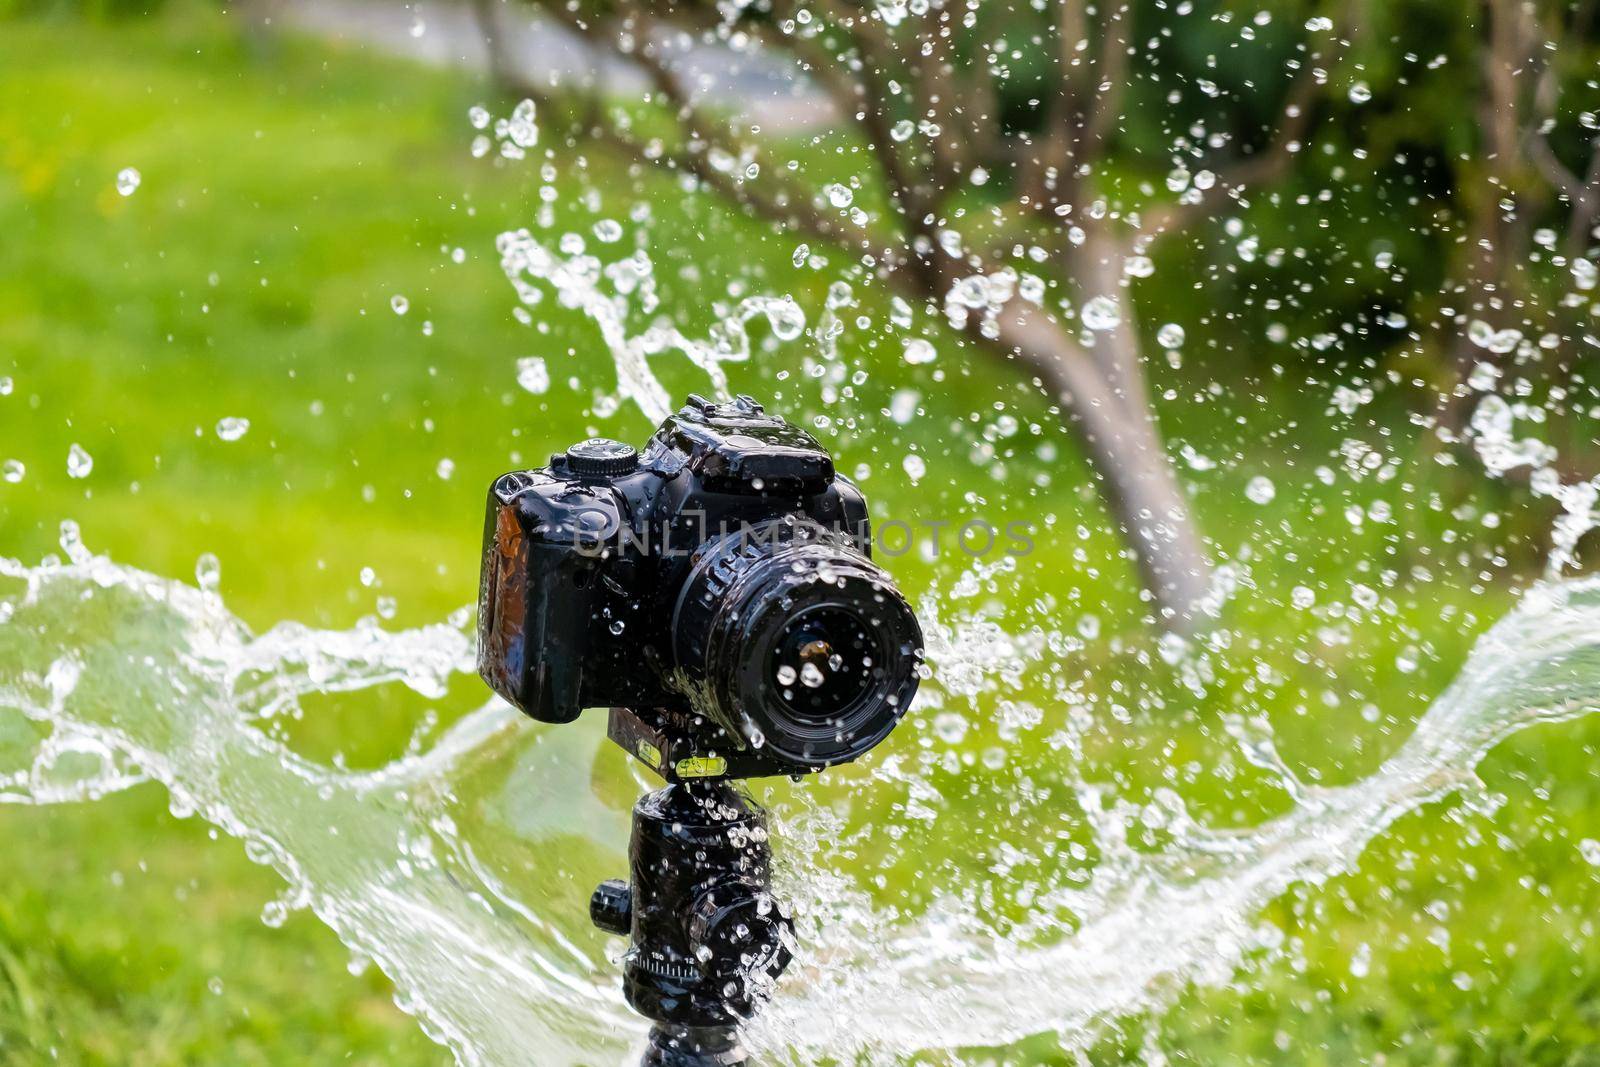 A digital camera on a tripod in the rain.